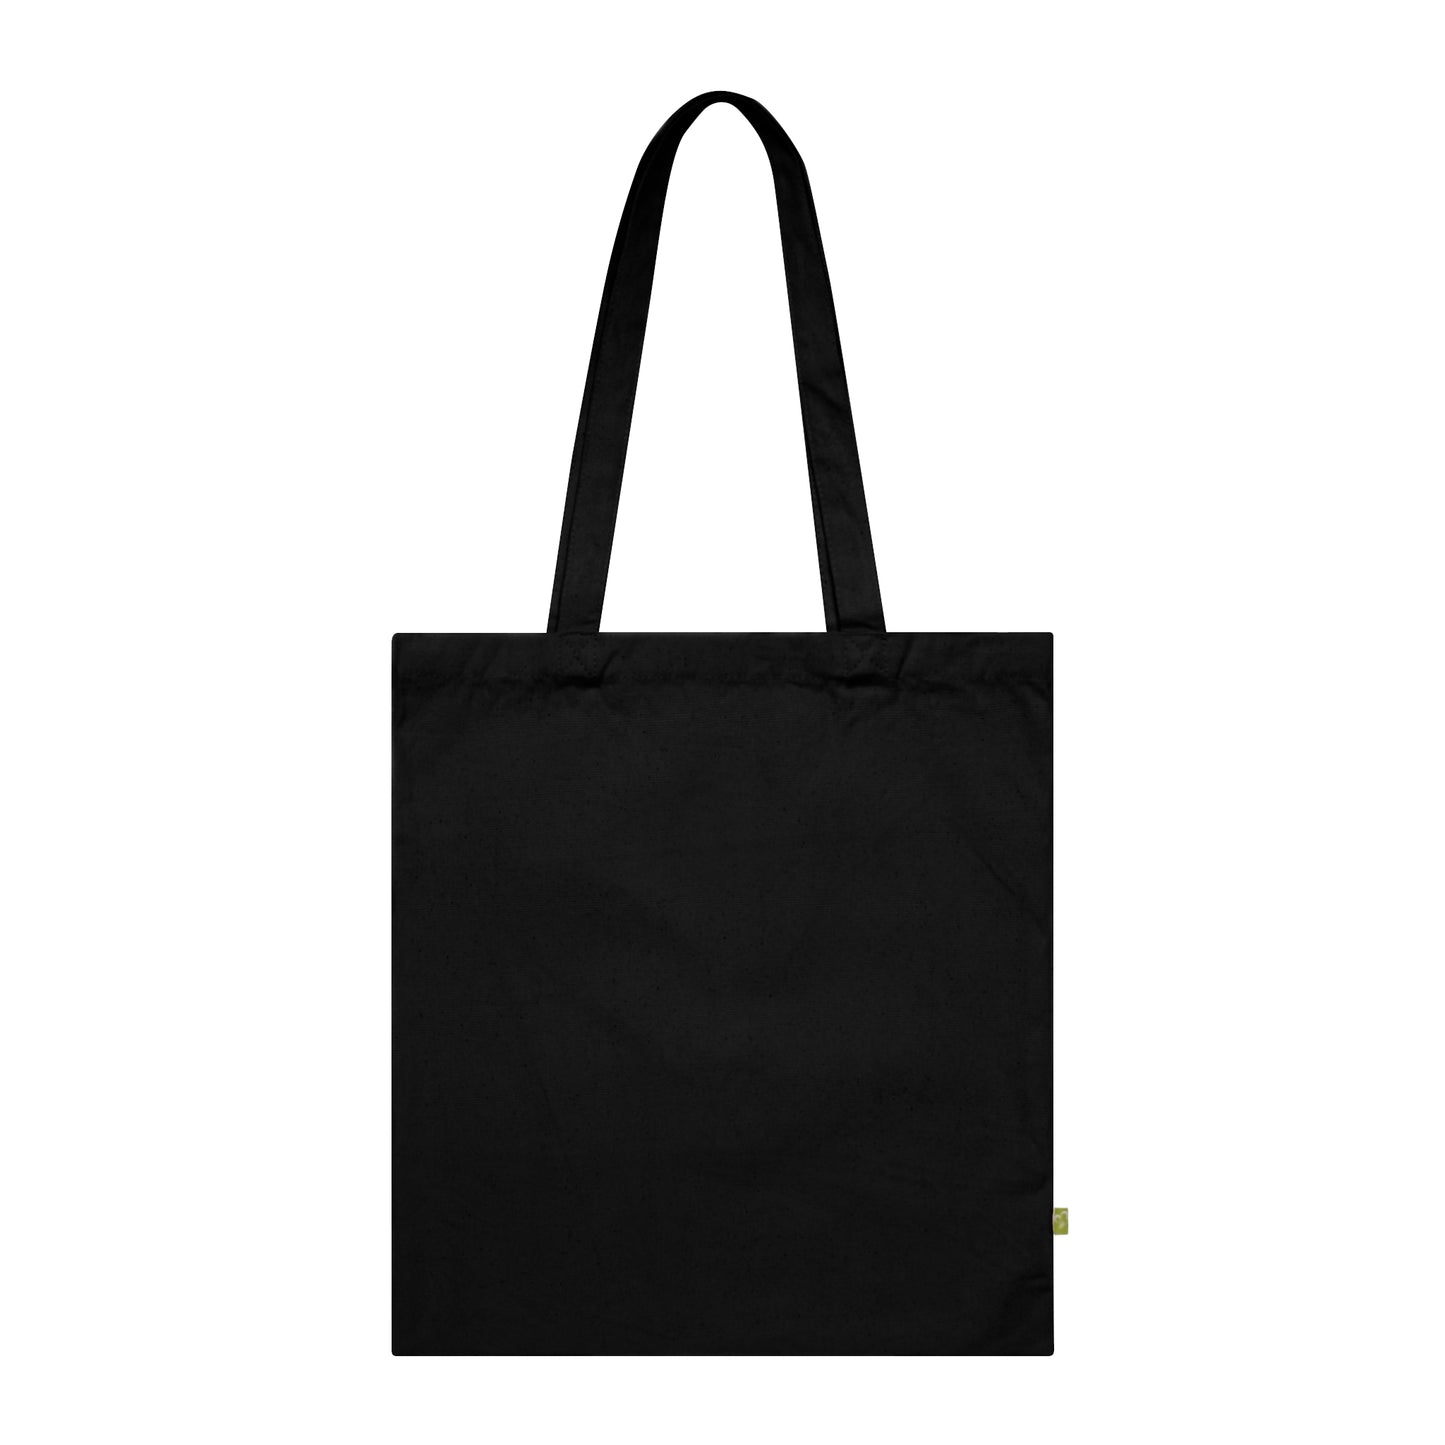 Alexandre Cabanel Tote bag - Fallen Angel Art movement Organic Cotton black tote bag - Aesthetic vintage black tote bag